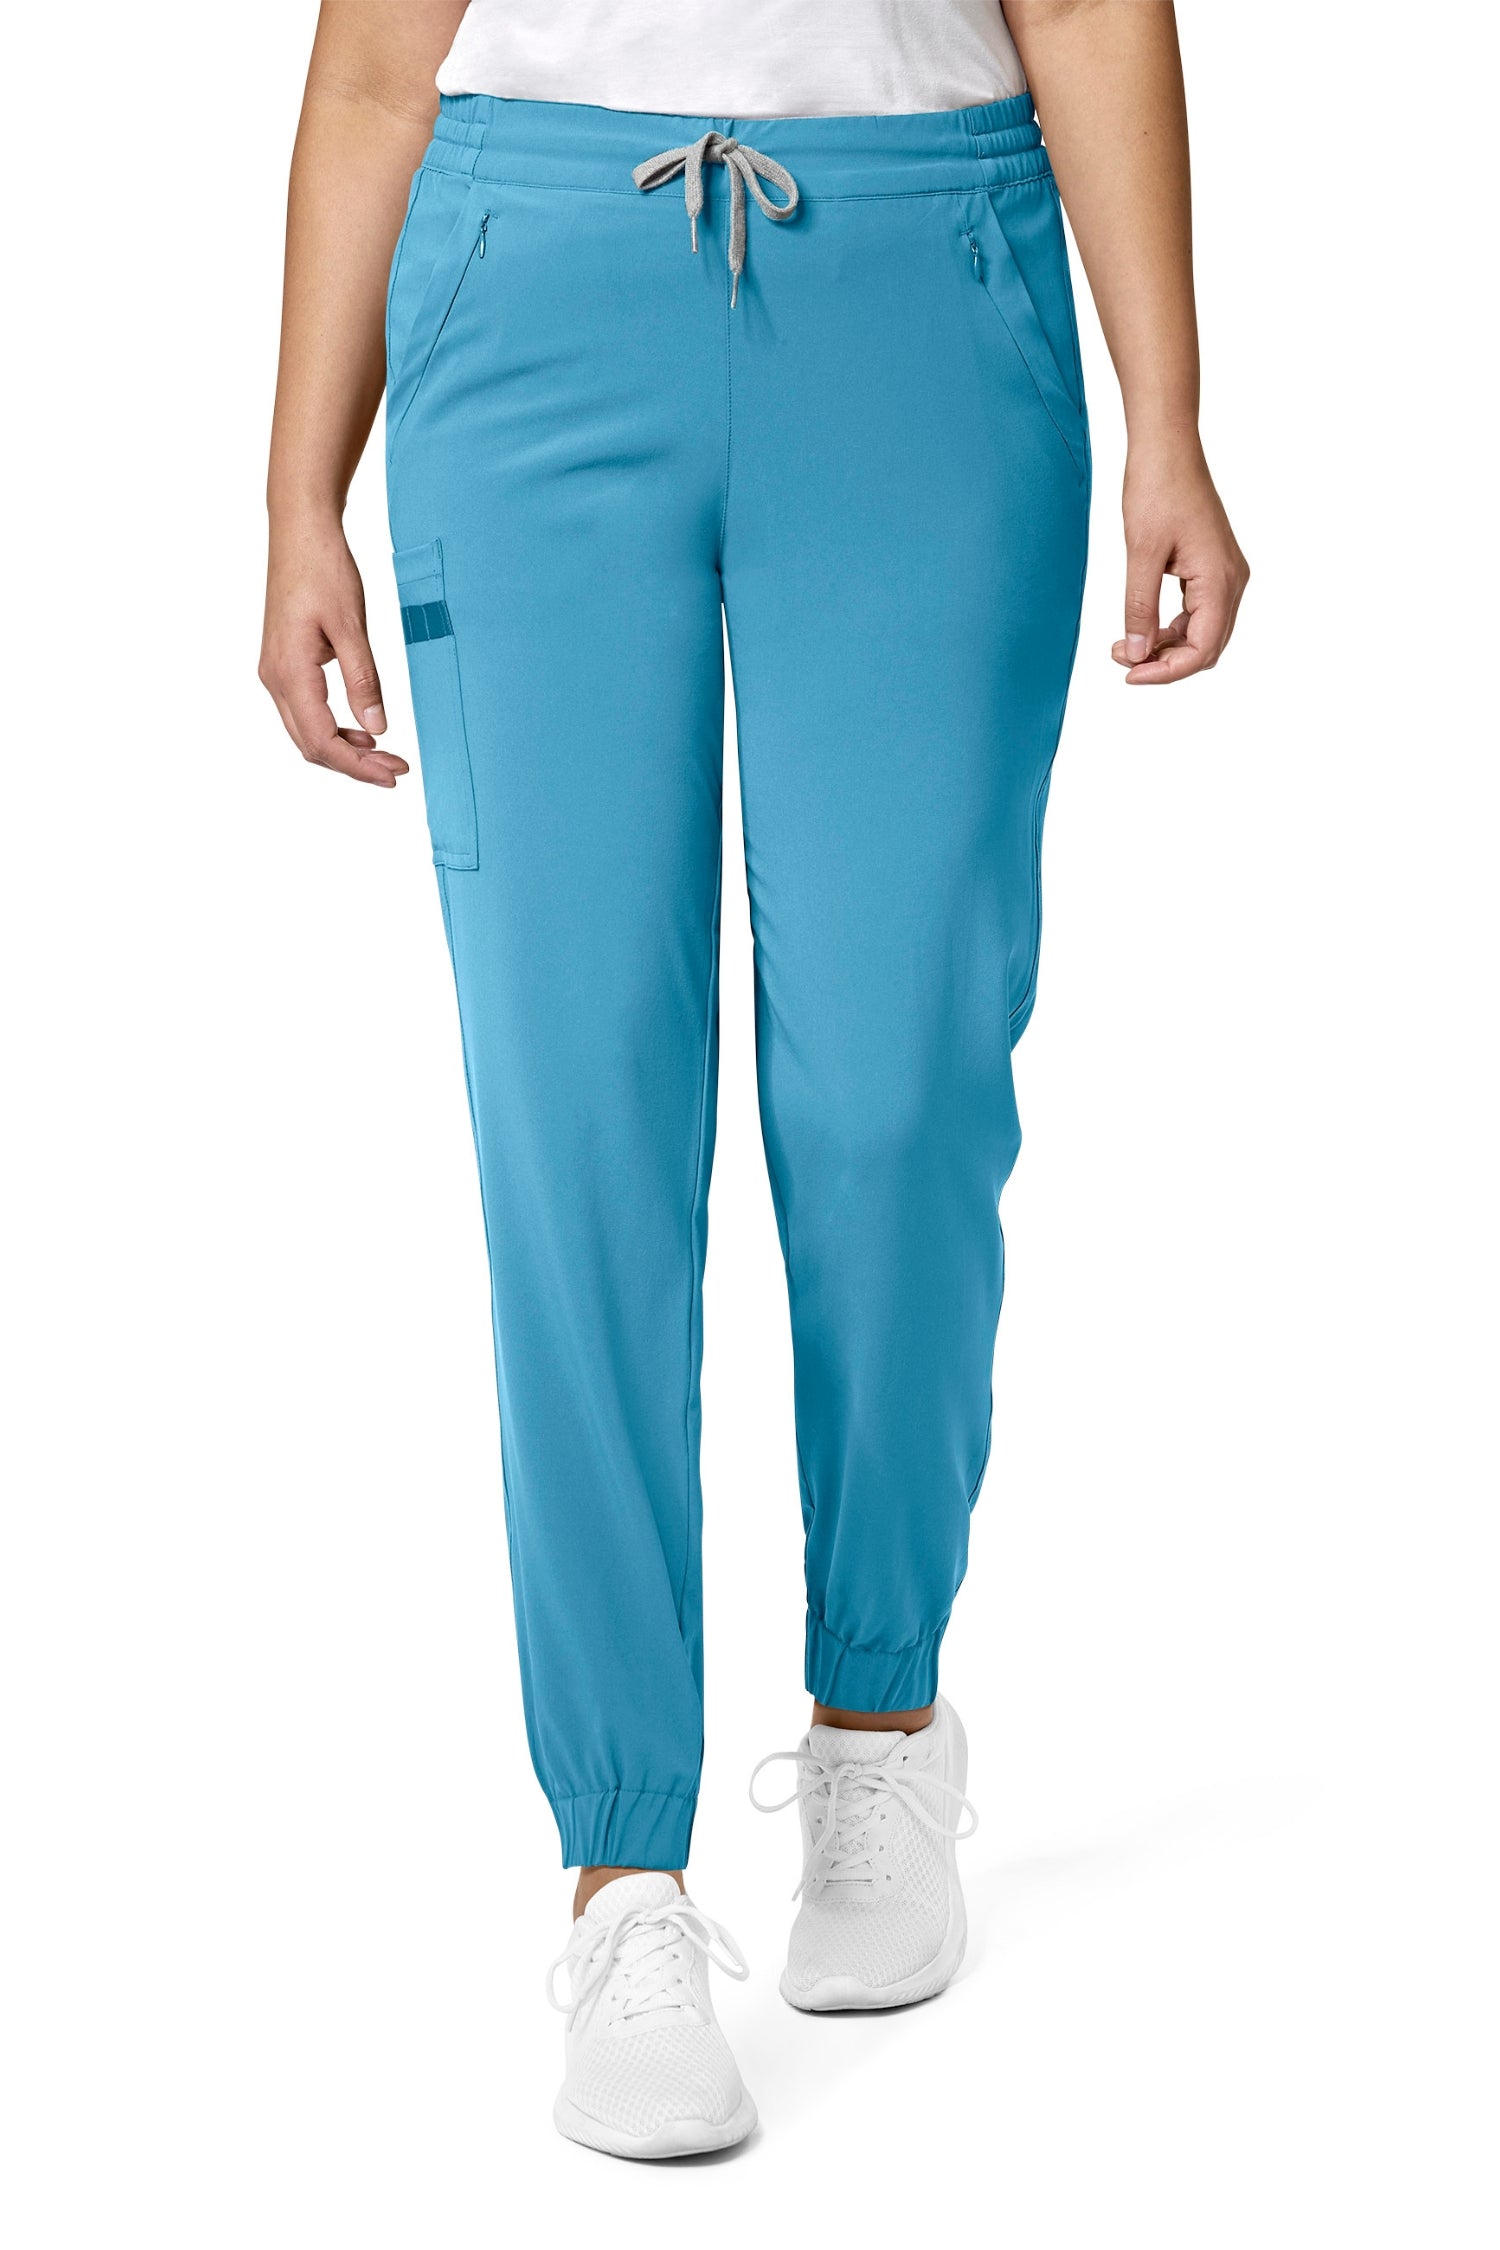 Femme en RENEW, coupe moderne, poches cargo, pantalon médical bleu turquoise